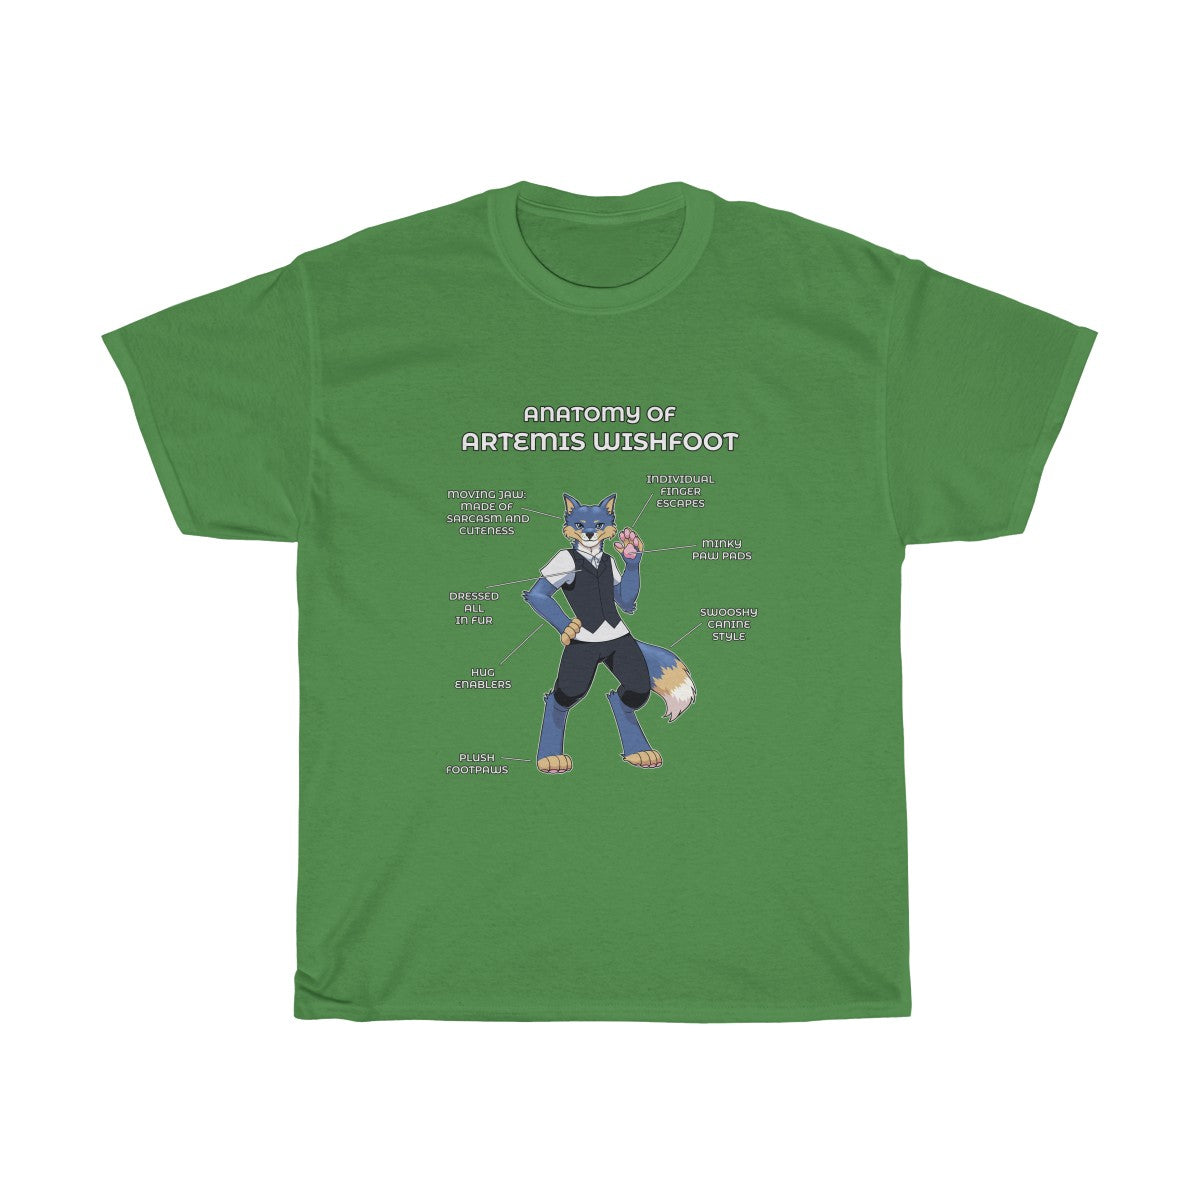 Anatomy of Artemis - T-Shirt T-Shirt Artemis Wishfoot Green S 